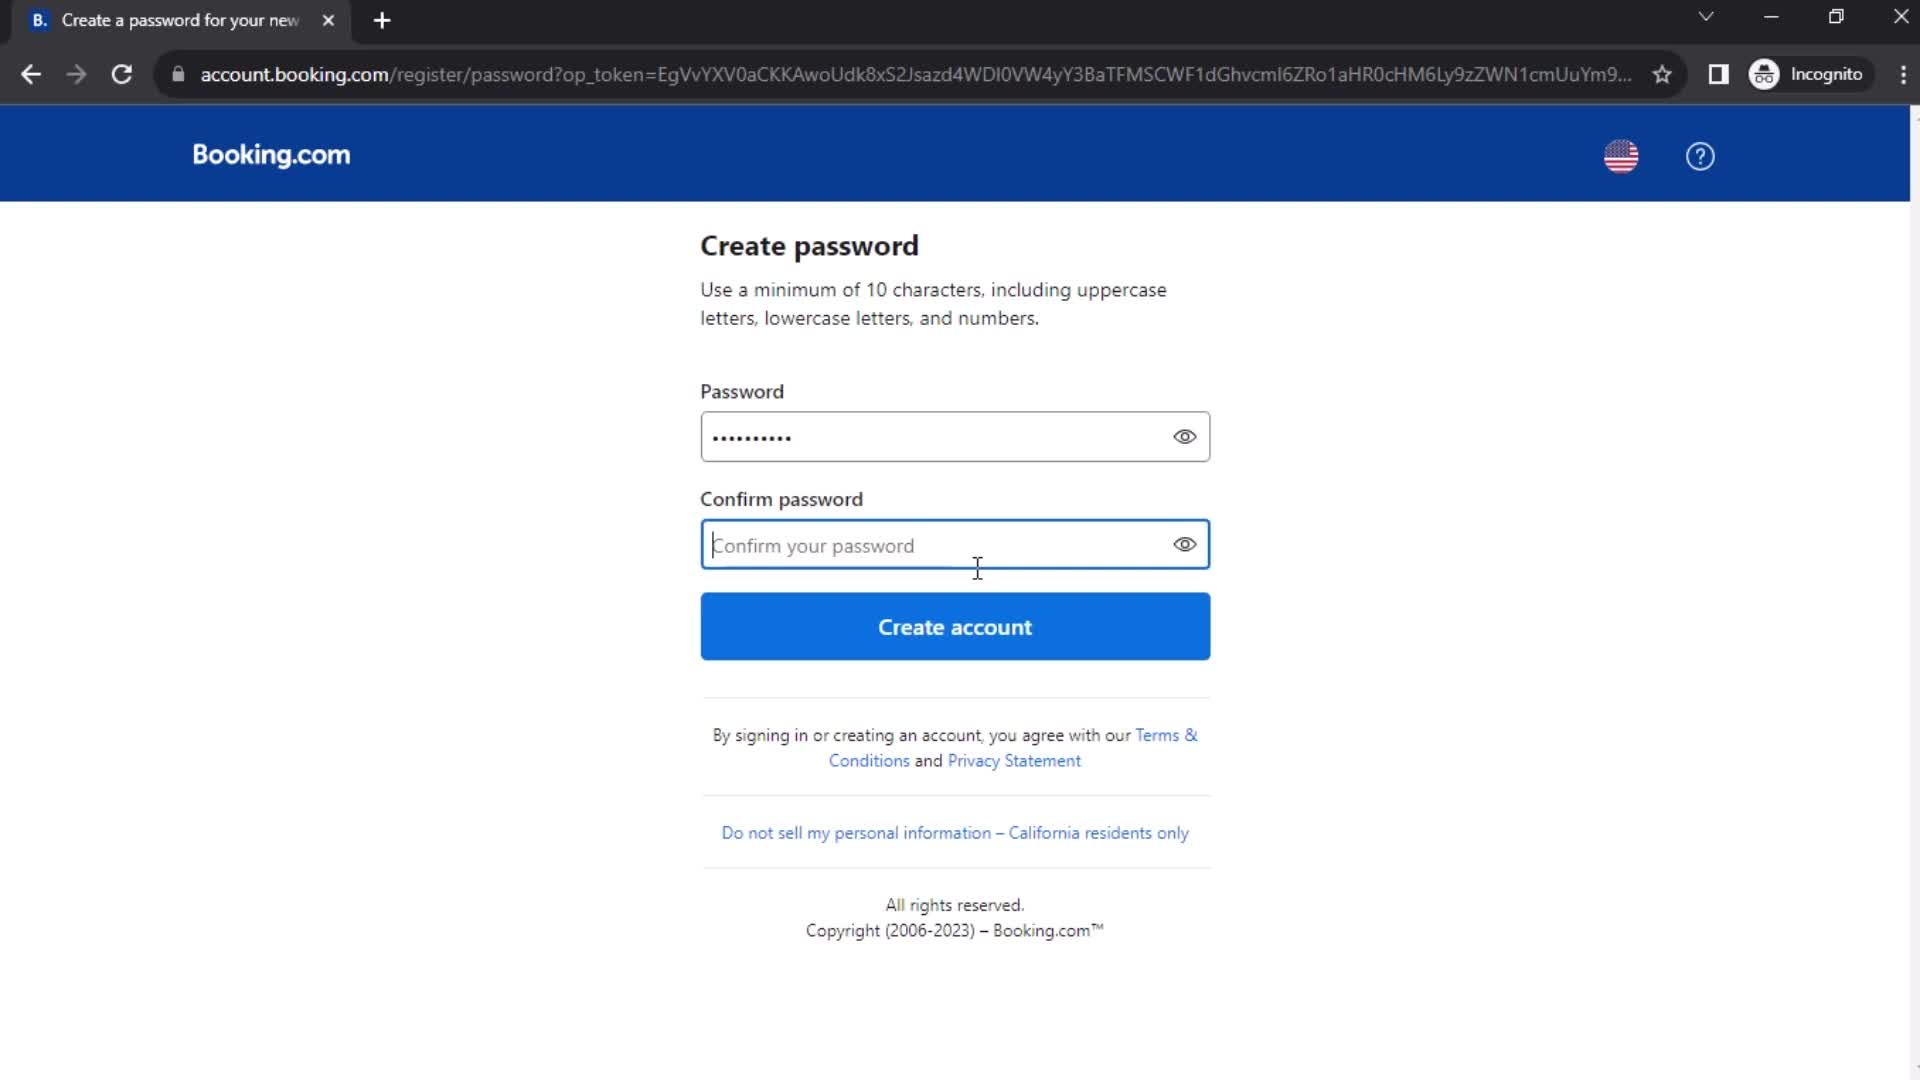 Booking.com confirm password screenshot